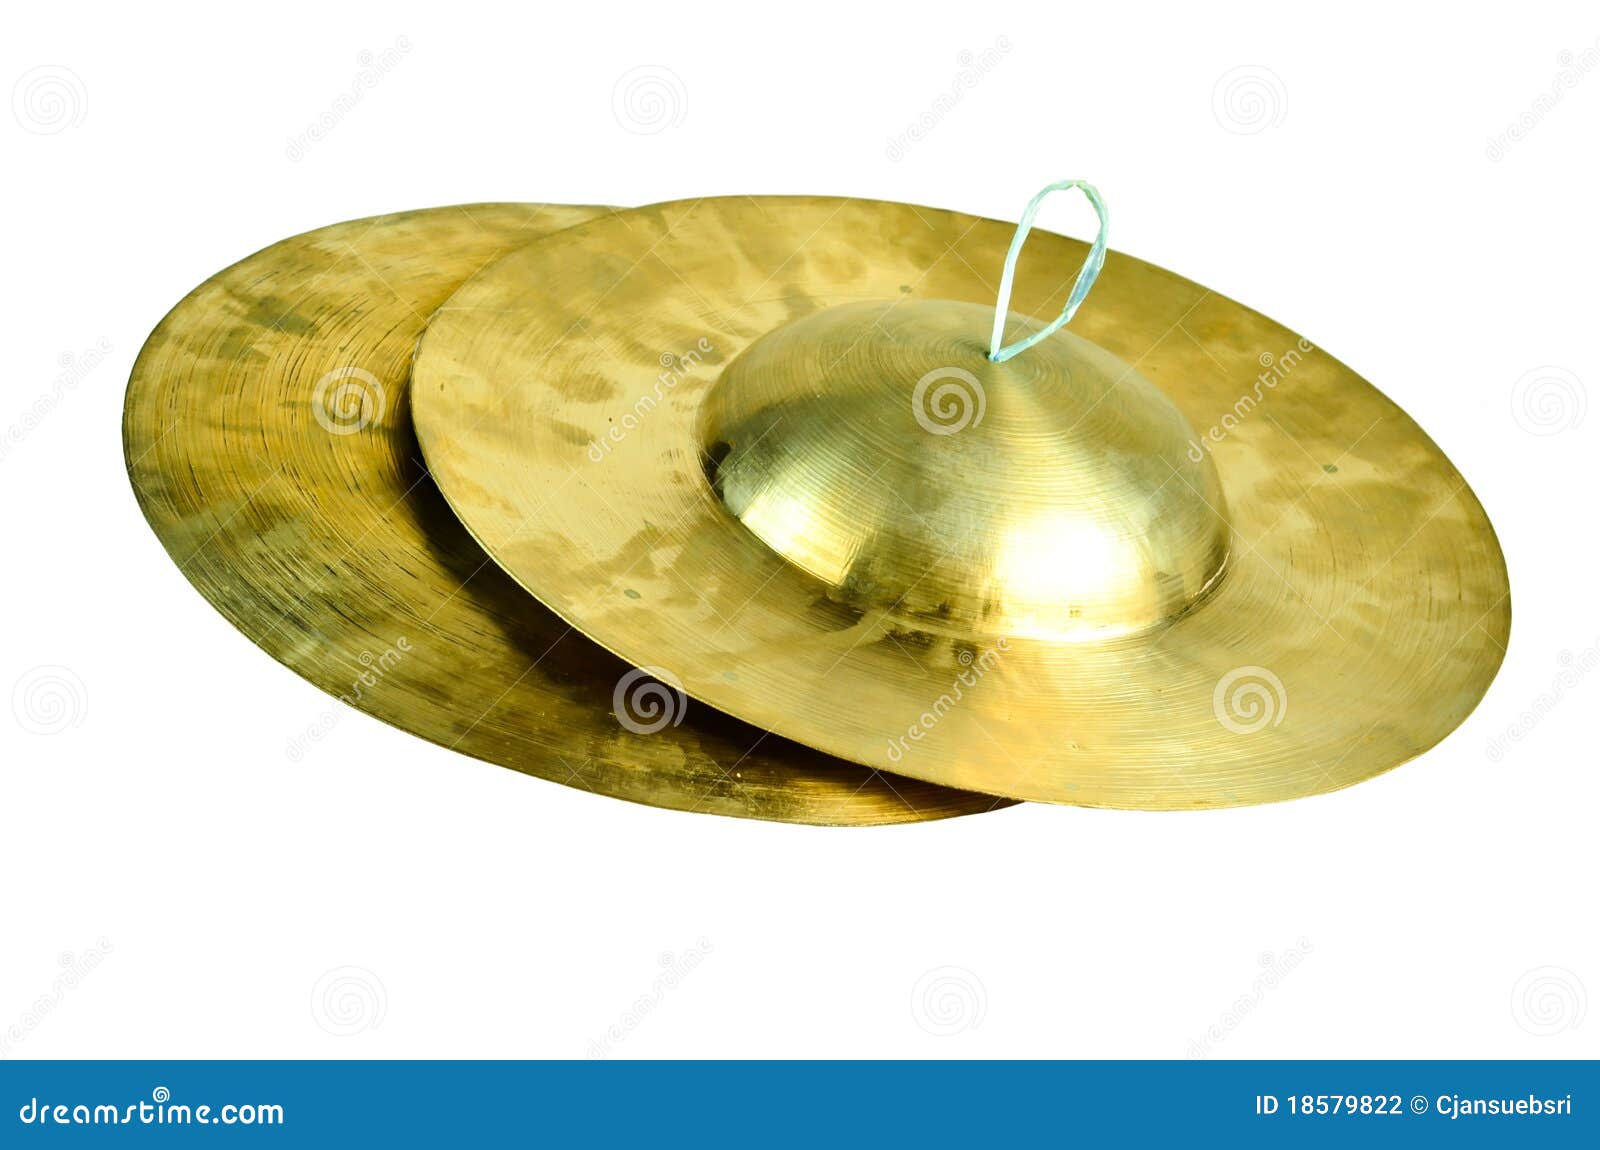 thai small cymbal